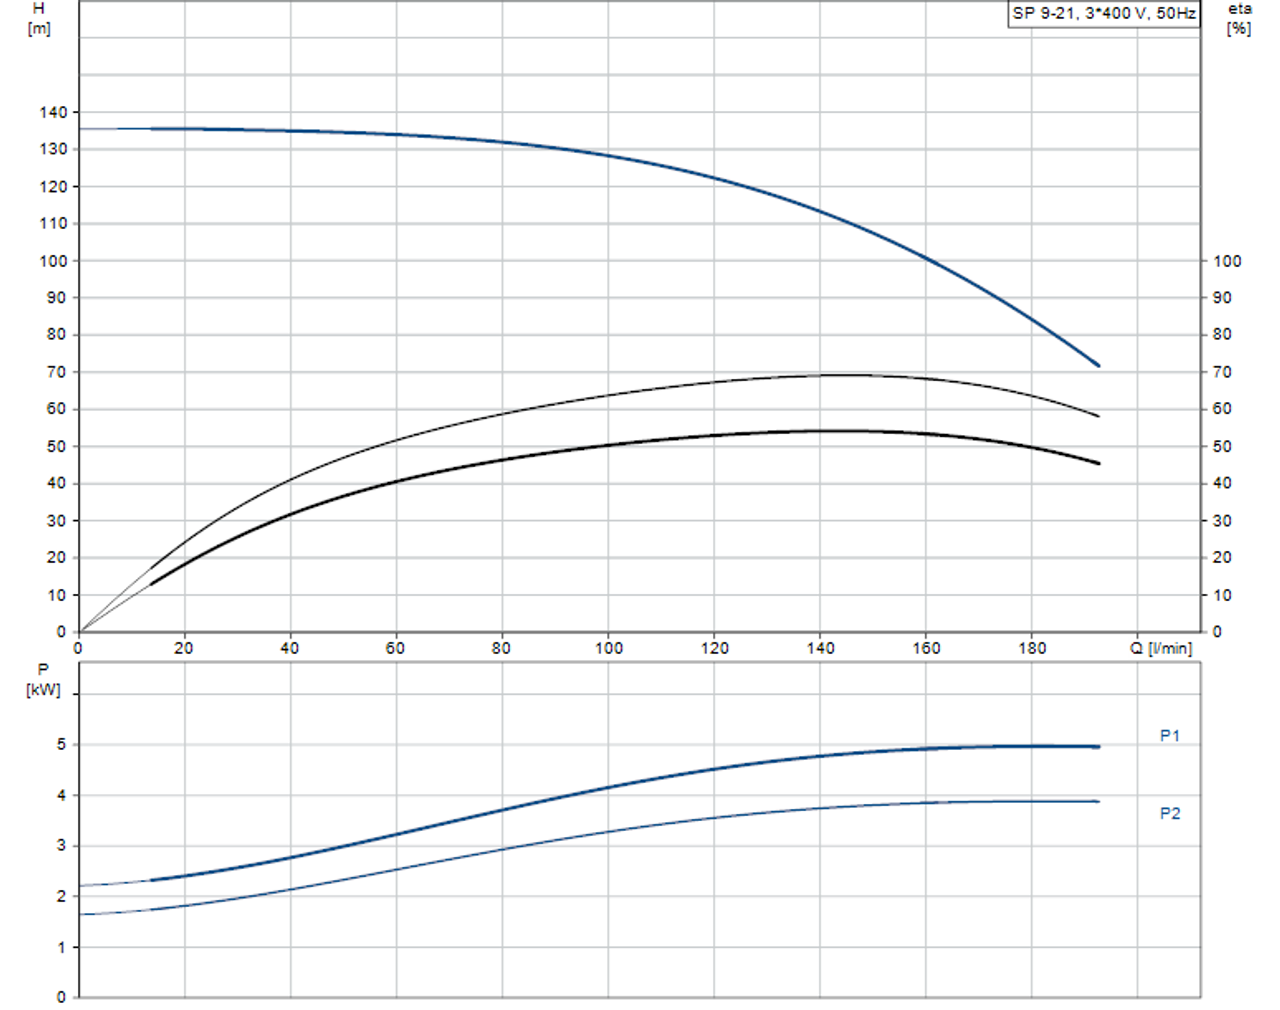 SP 9-21 415v Performance Curve